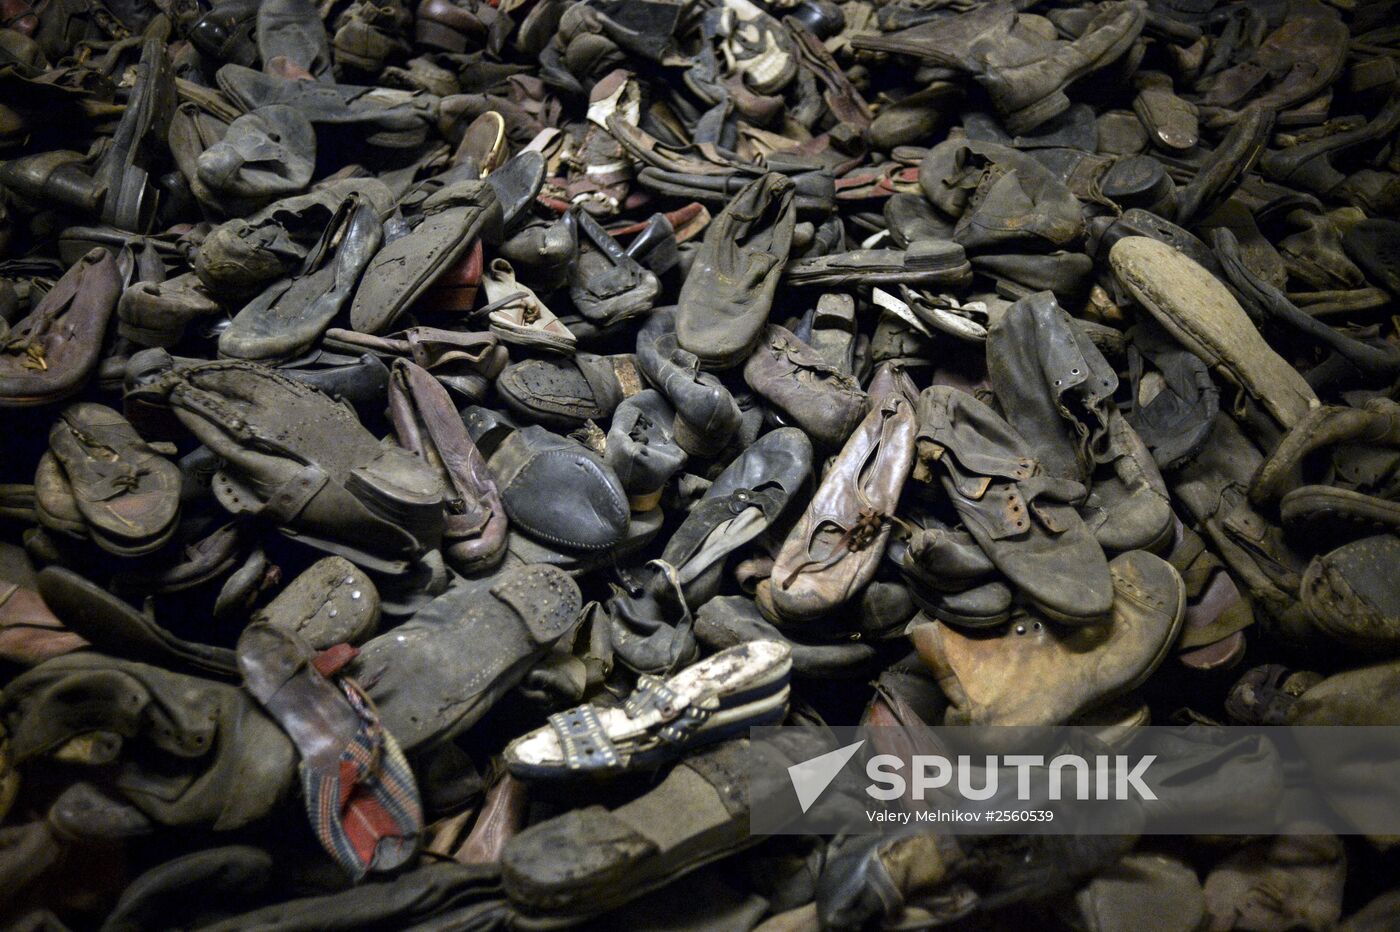 70th anniversary of Auschwitz-Birkenau liberation by Red Army